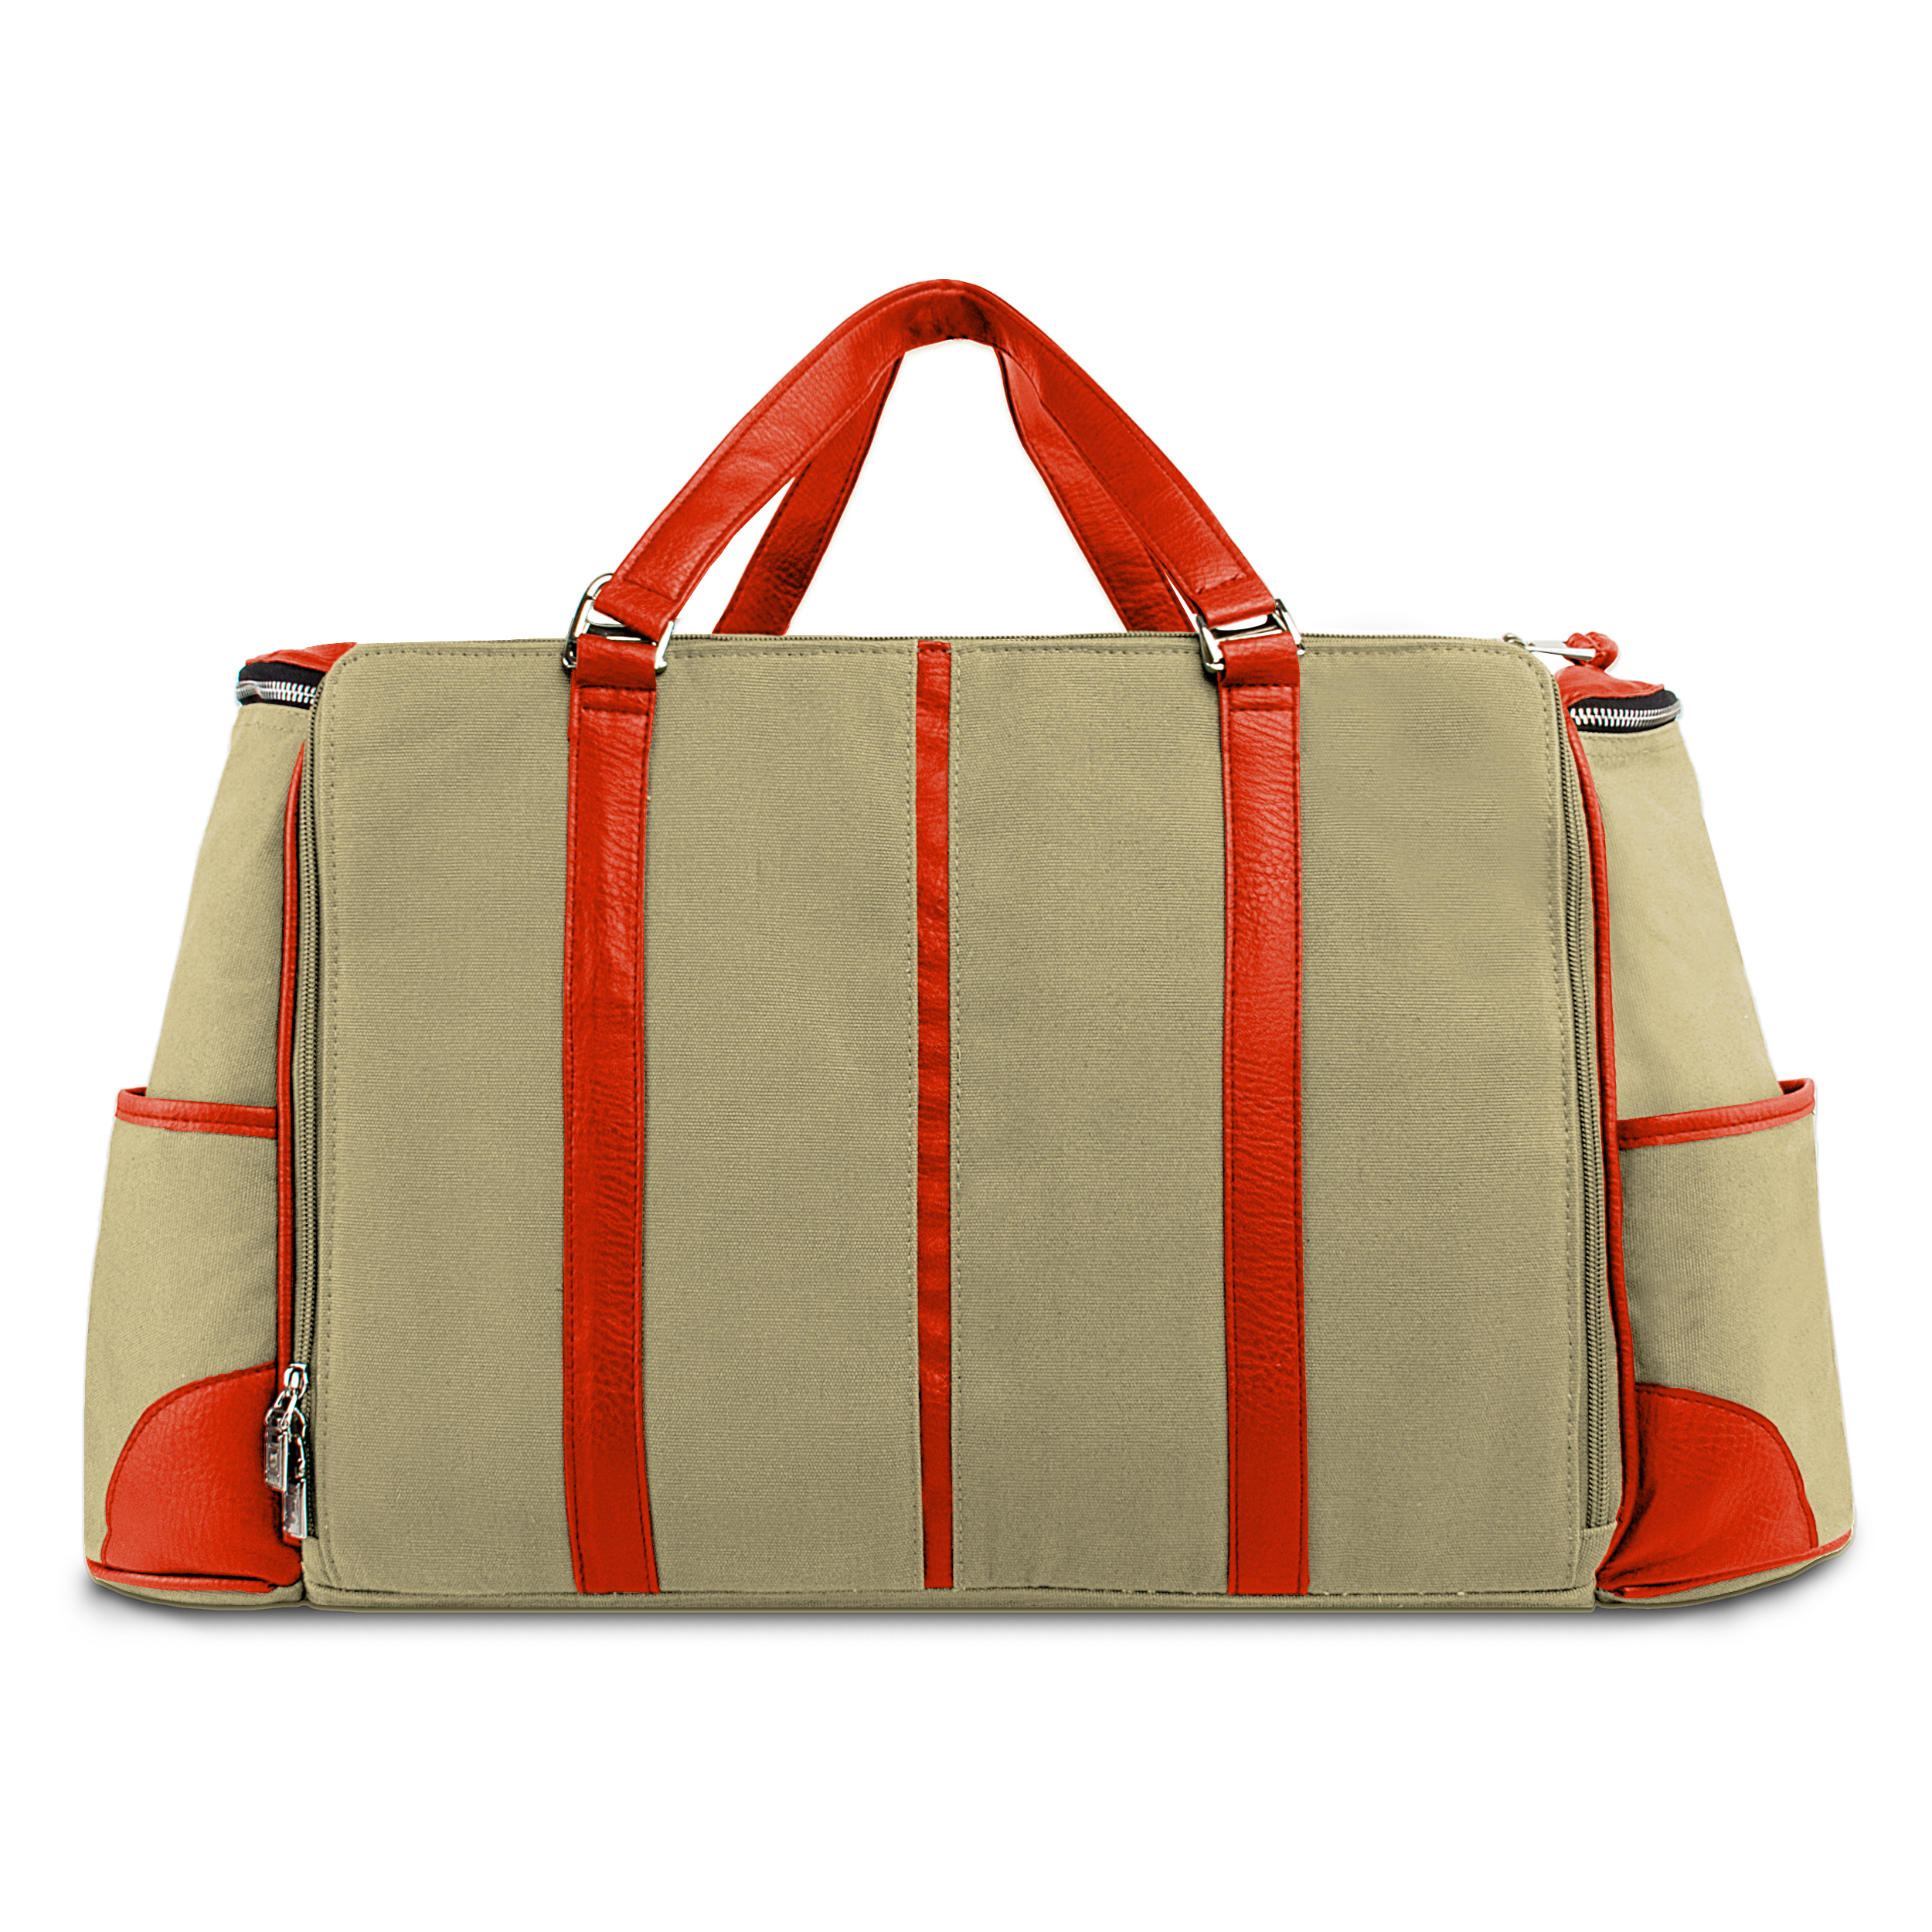 Lencca Alpaque Duffle Bag for 11.6' - 15'6 laptops (Raw Beige / Orange)